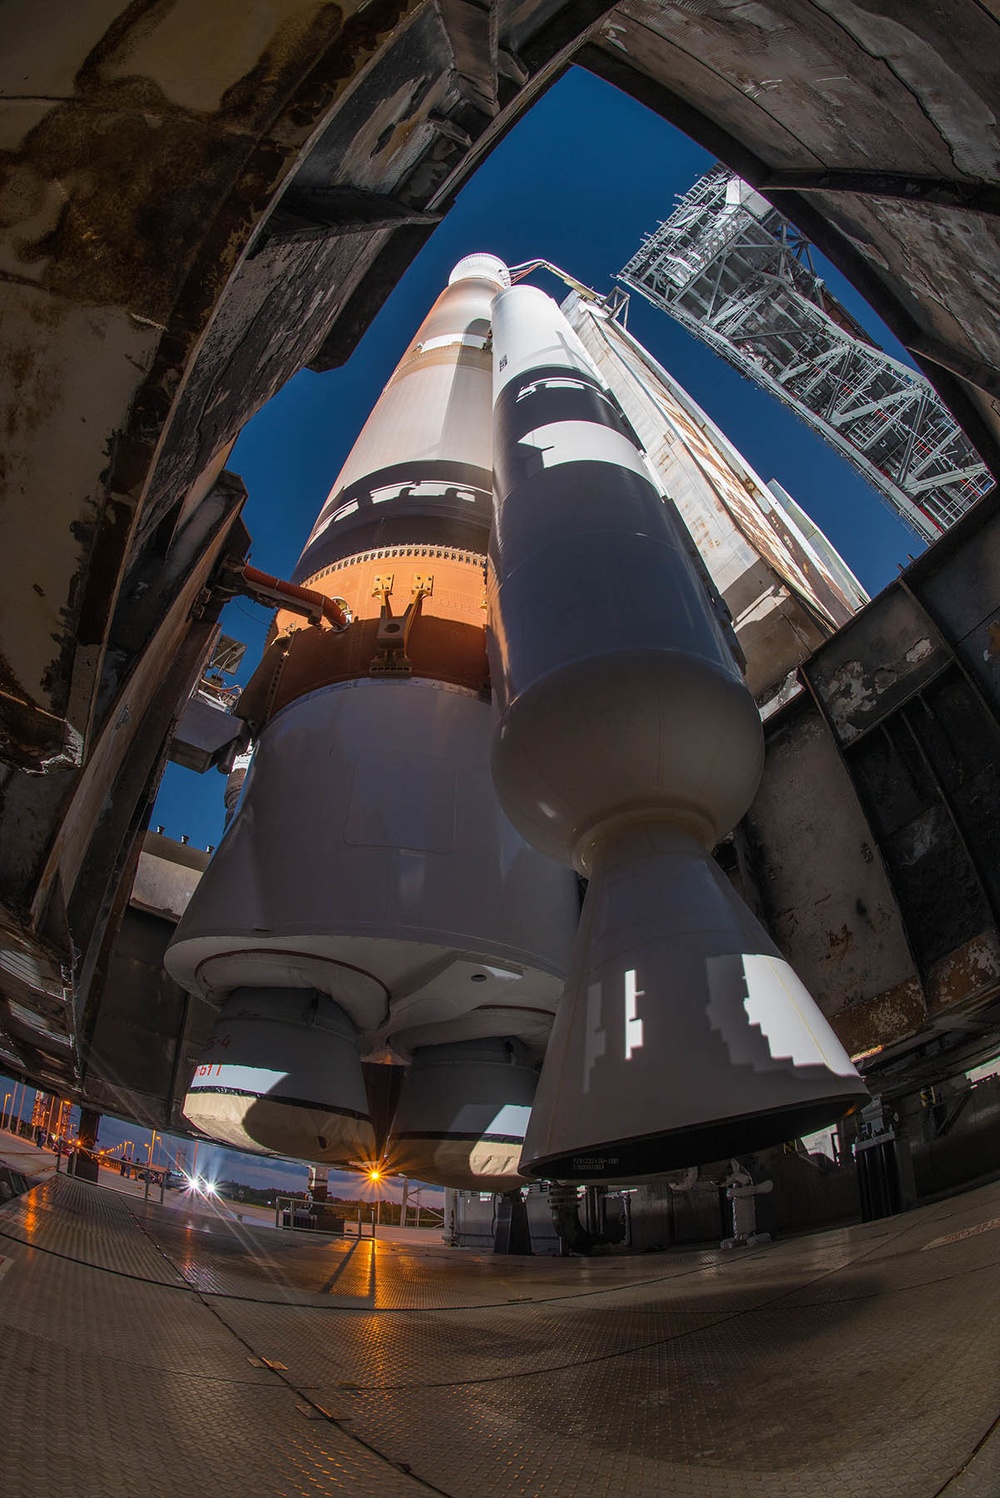 45th SW supports successful Atlas V OSIRIS REx launch